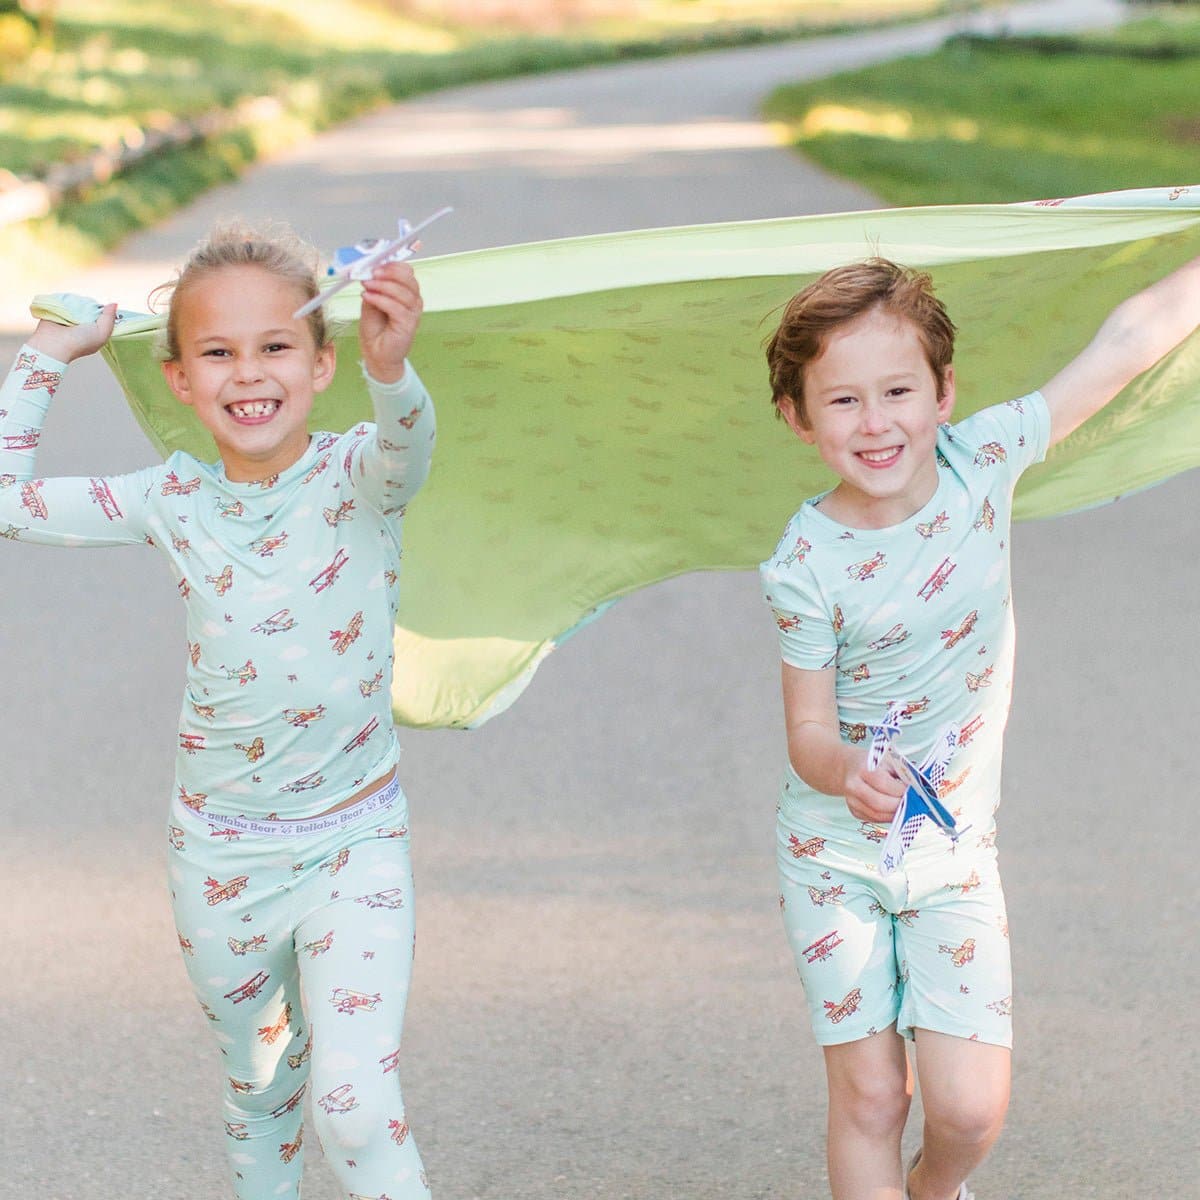 Jingle Jammies Pajama Set for Toddler & Baby